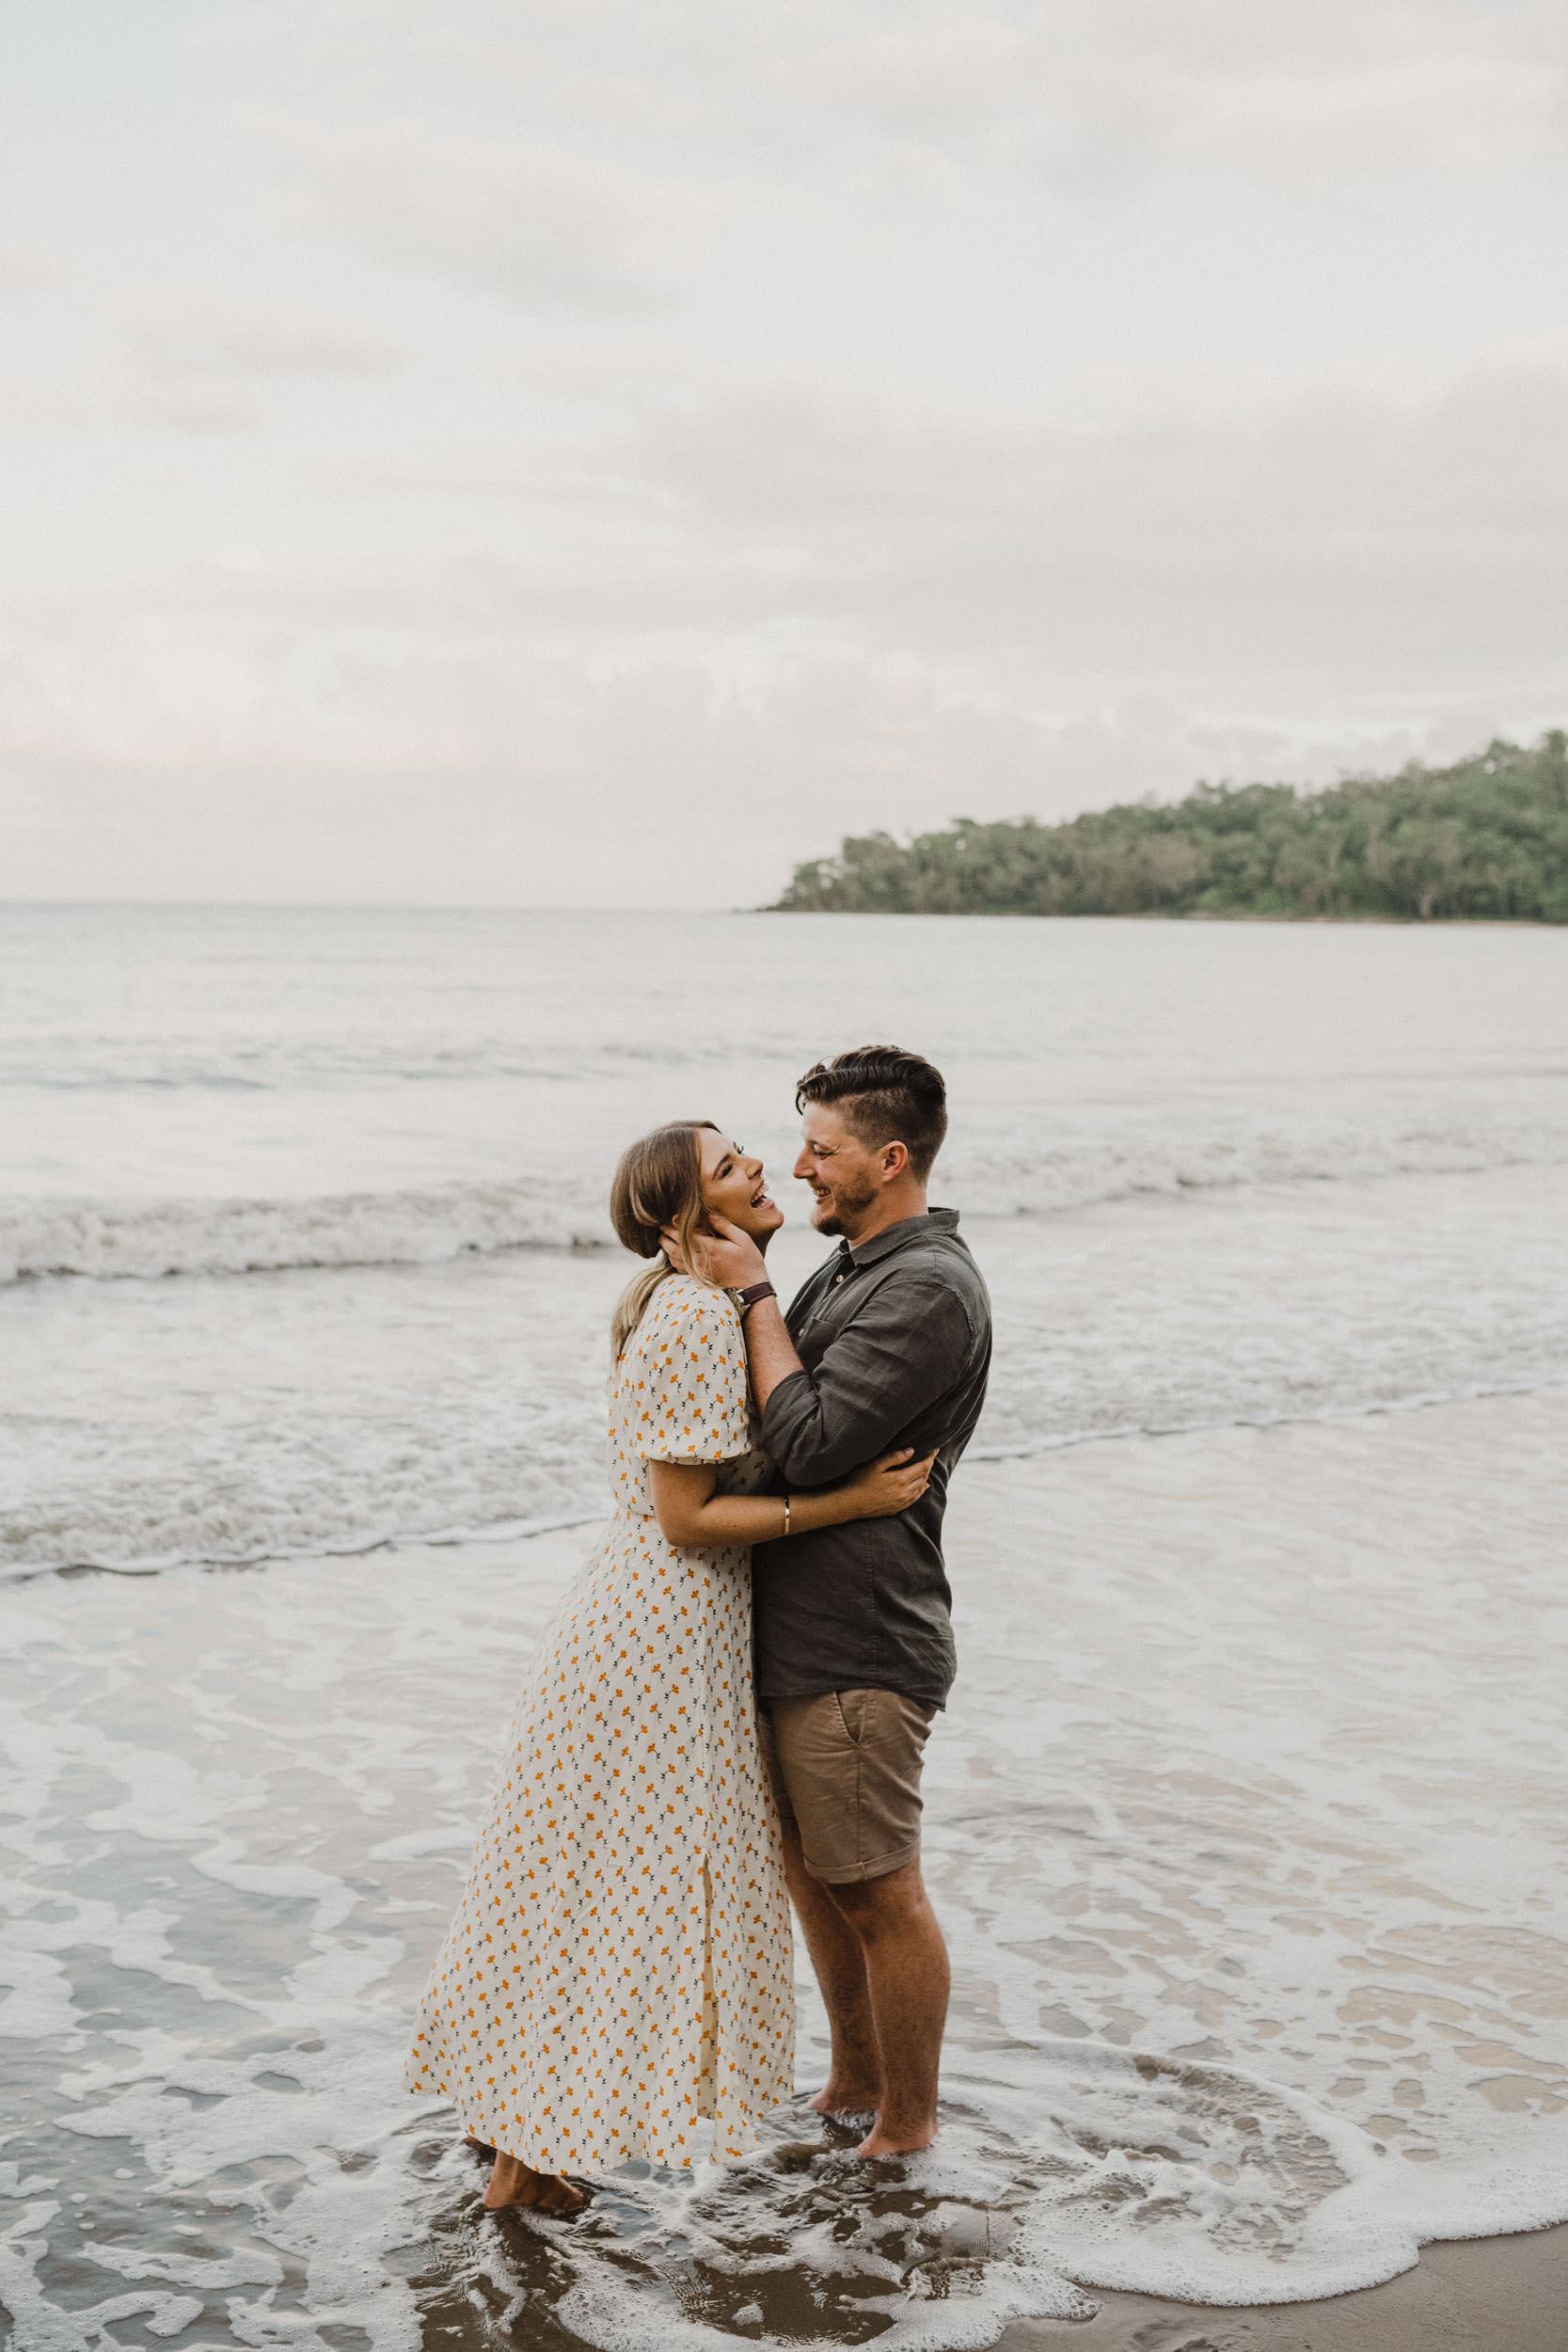 The Raw Photographer - Cairns Wedding Photographer - Beach Engagement Shoot - Candid Picnic-29.jpg